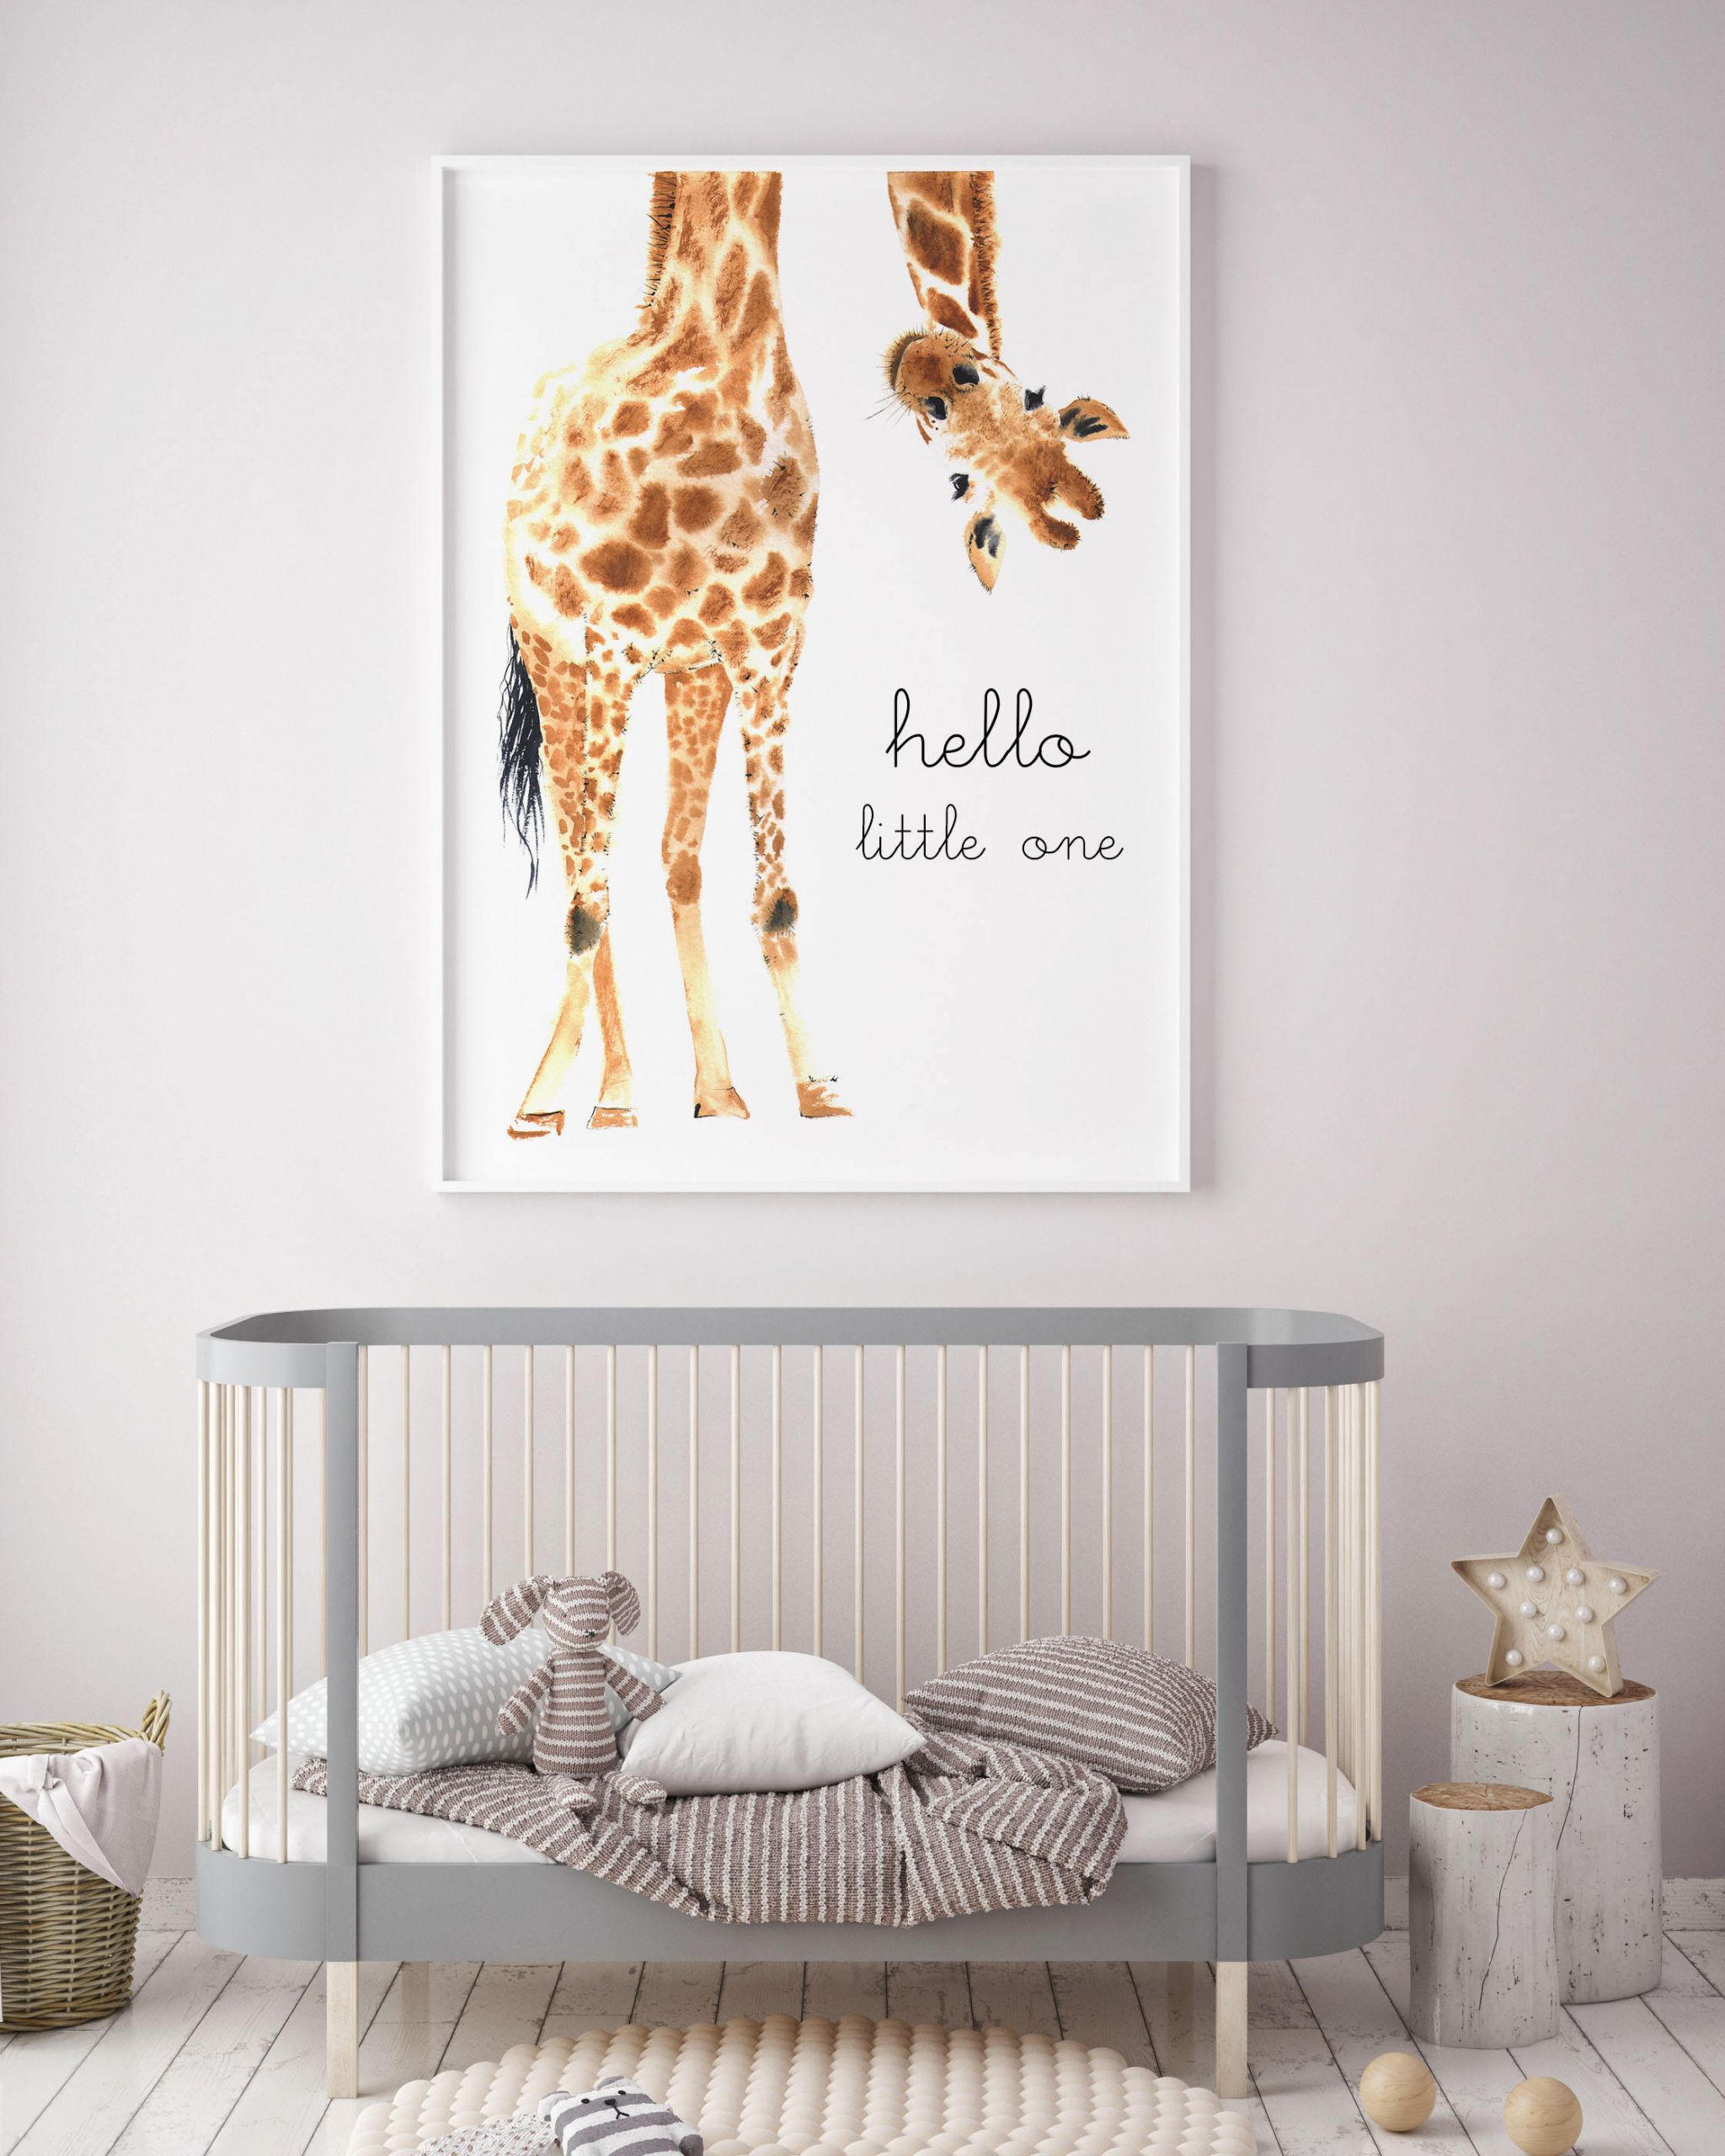 Giraffe Decorations For Baby Room
 Giraffe Animal nursery decor Nursery wall art PRINTABLE art